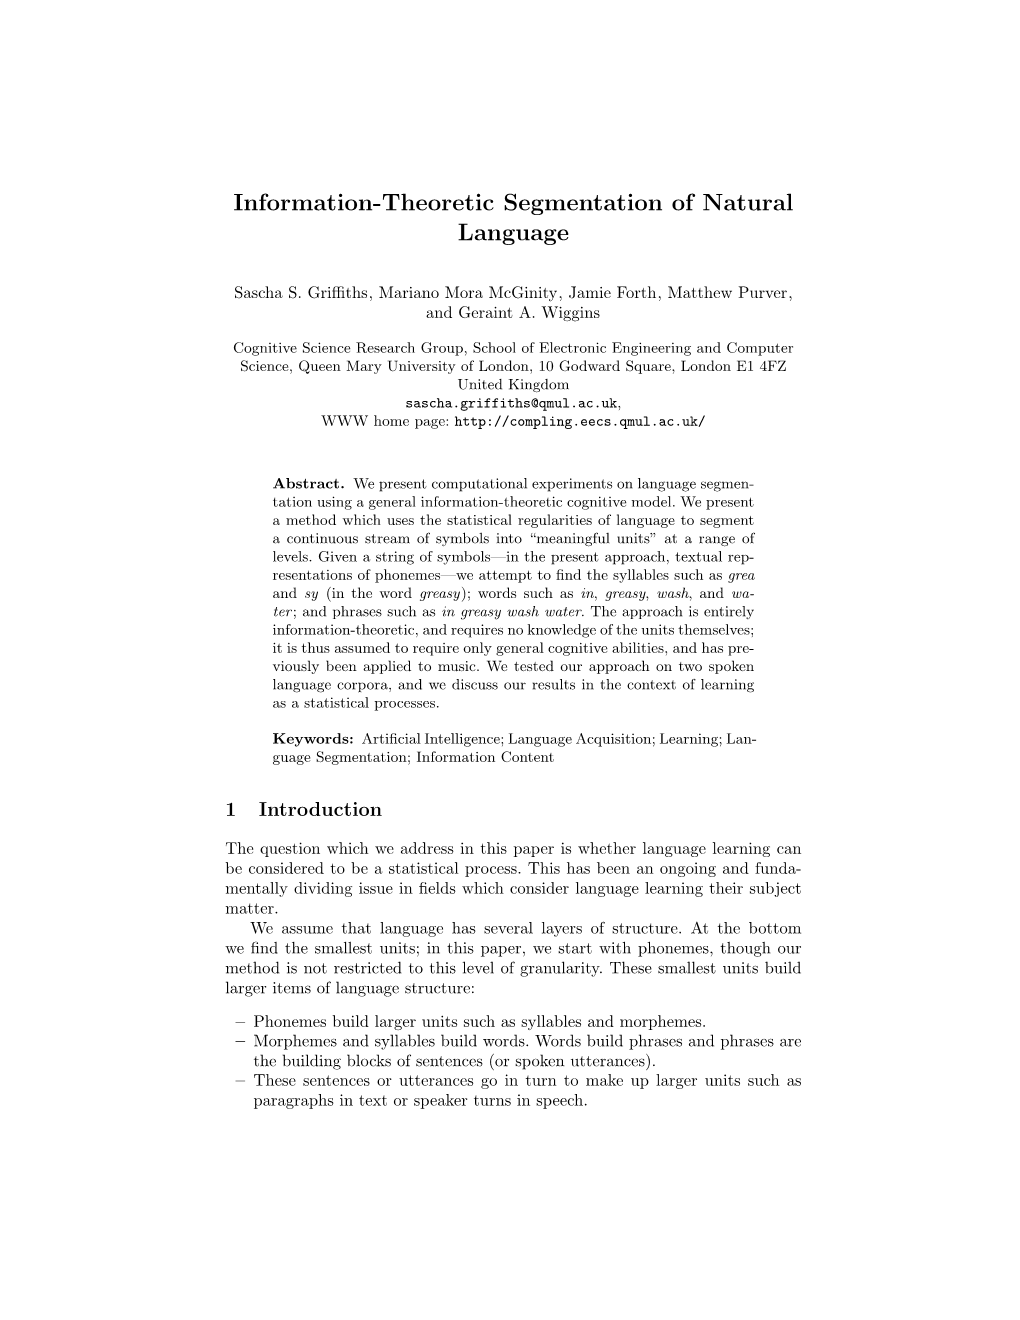 Information-Theoretic Segmentation of Natural Language